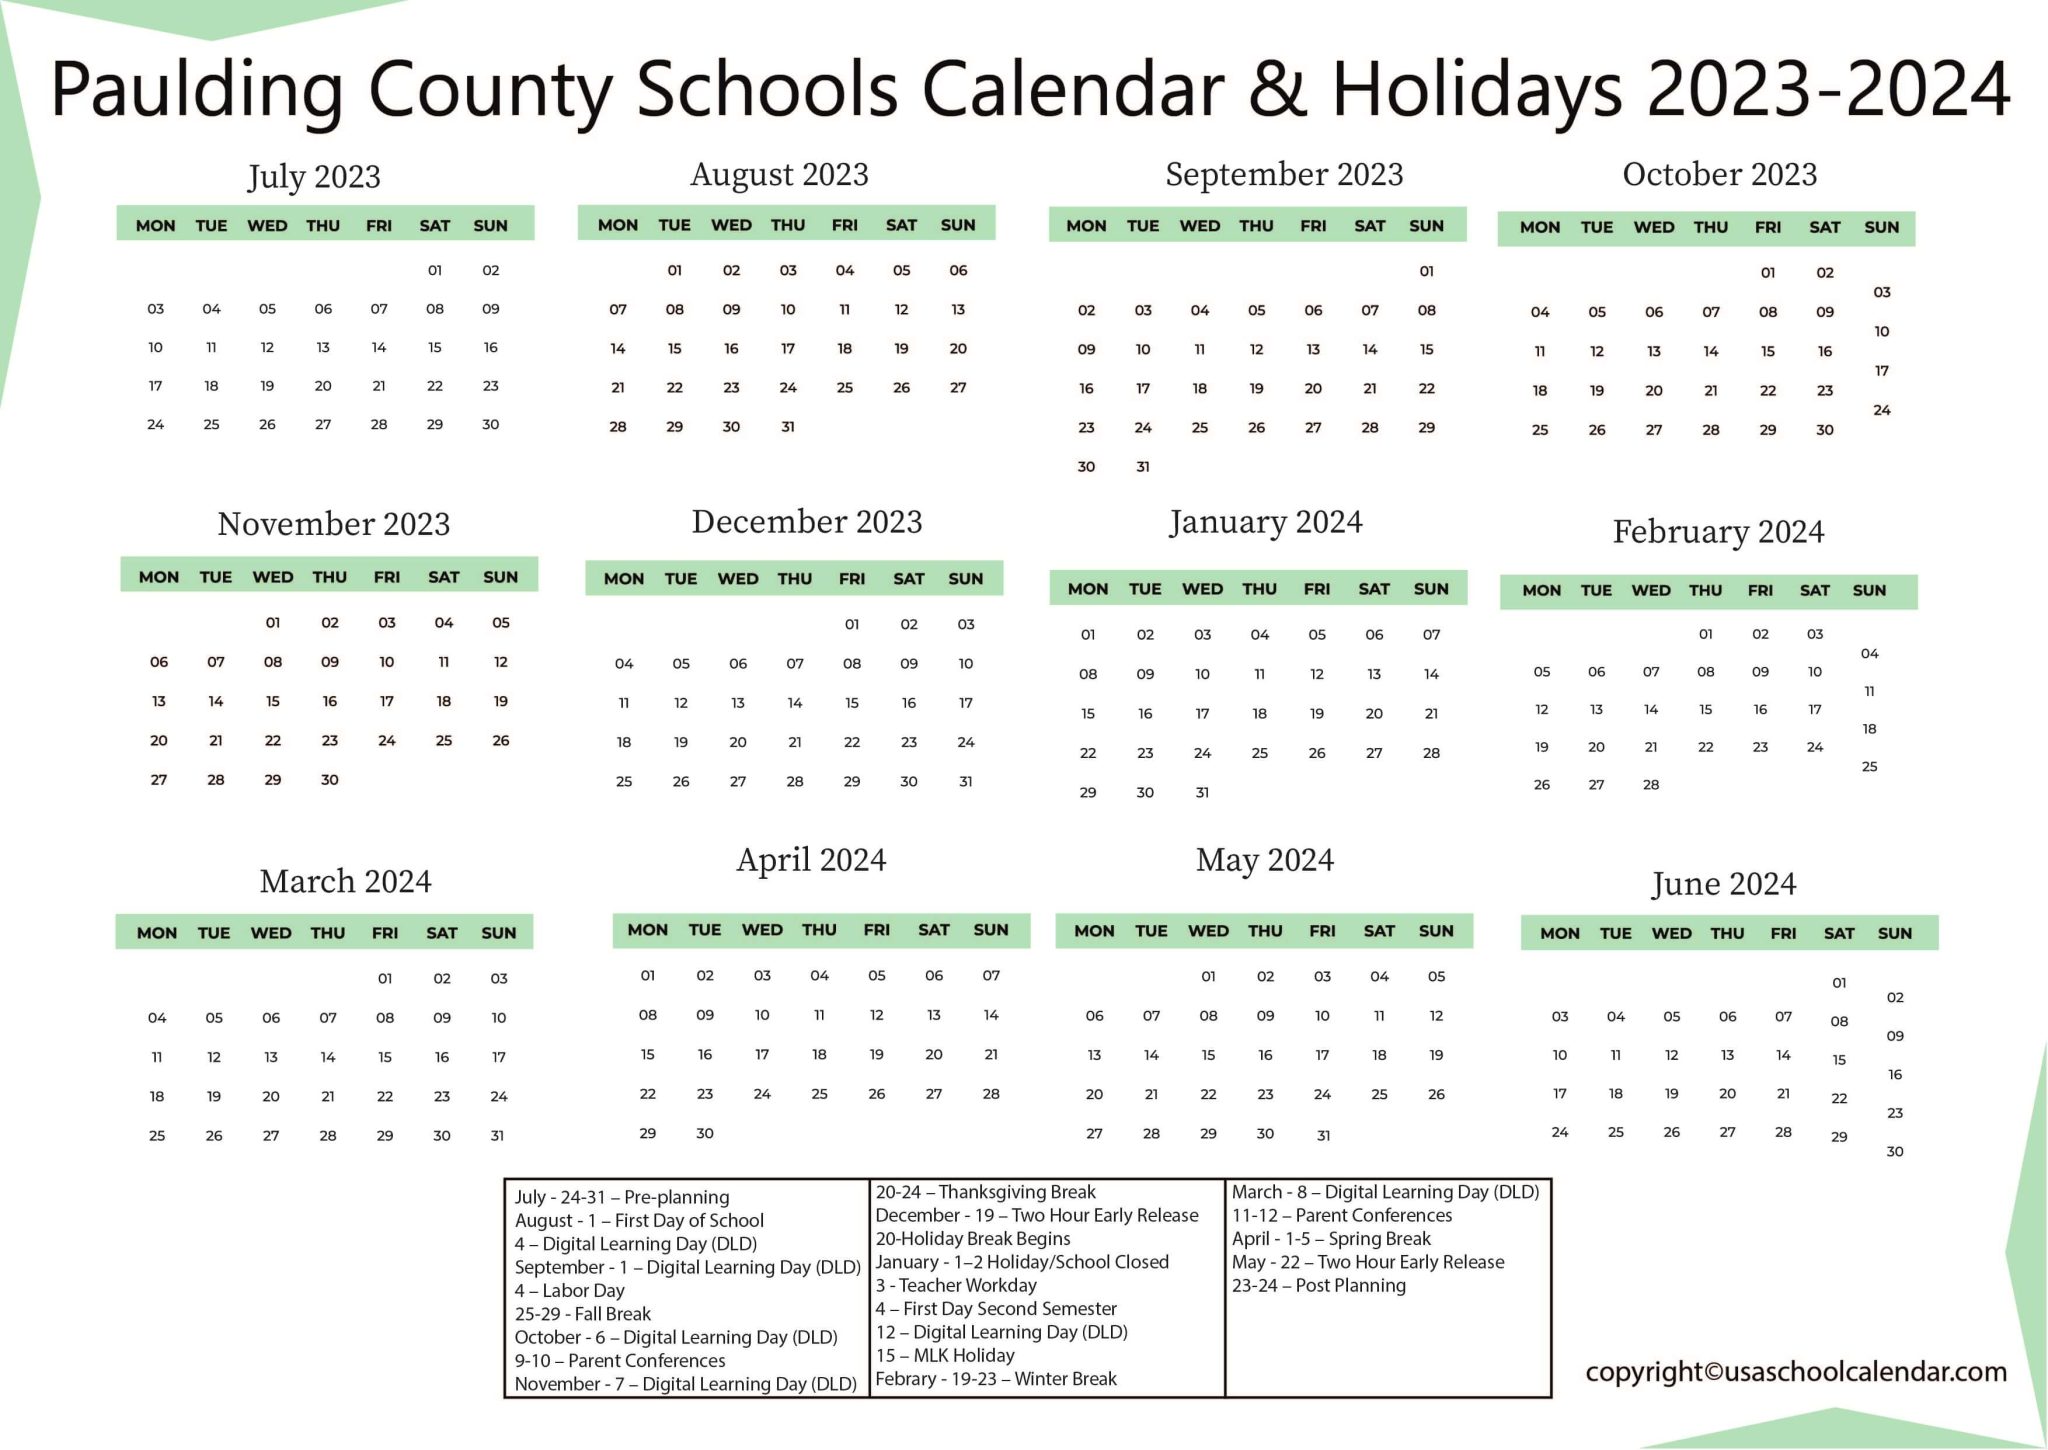 paulding-county-schools-calendar-holidays-2023-2024